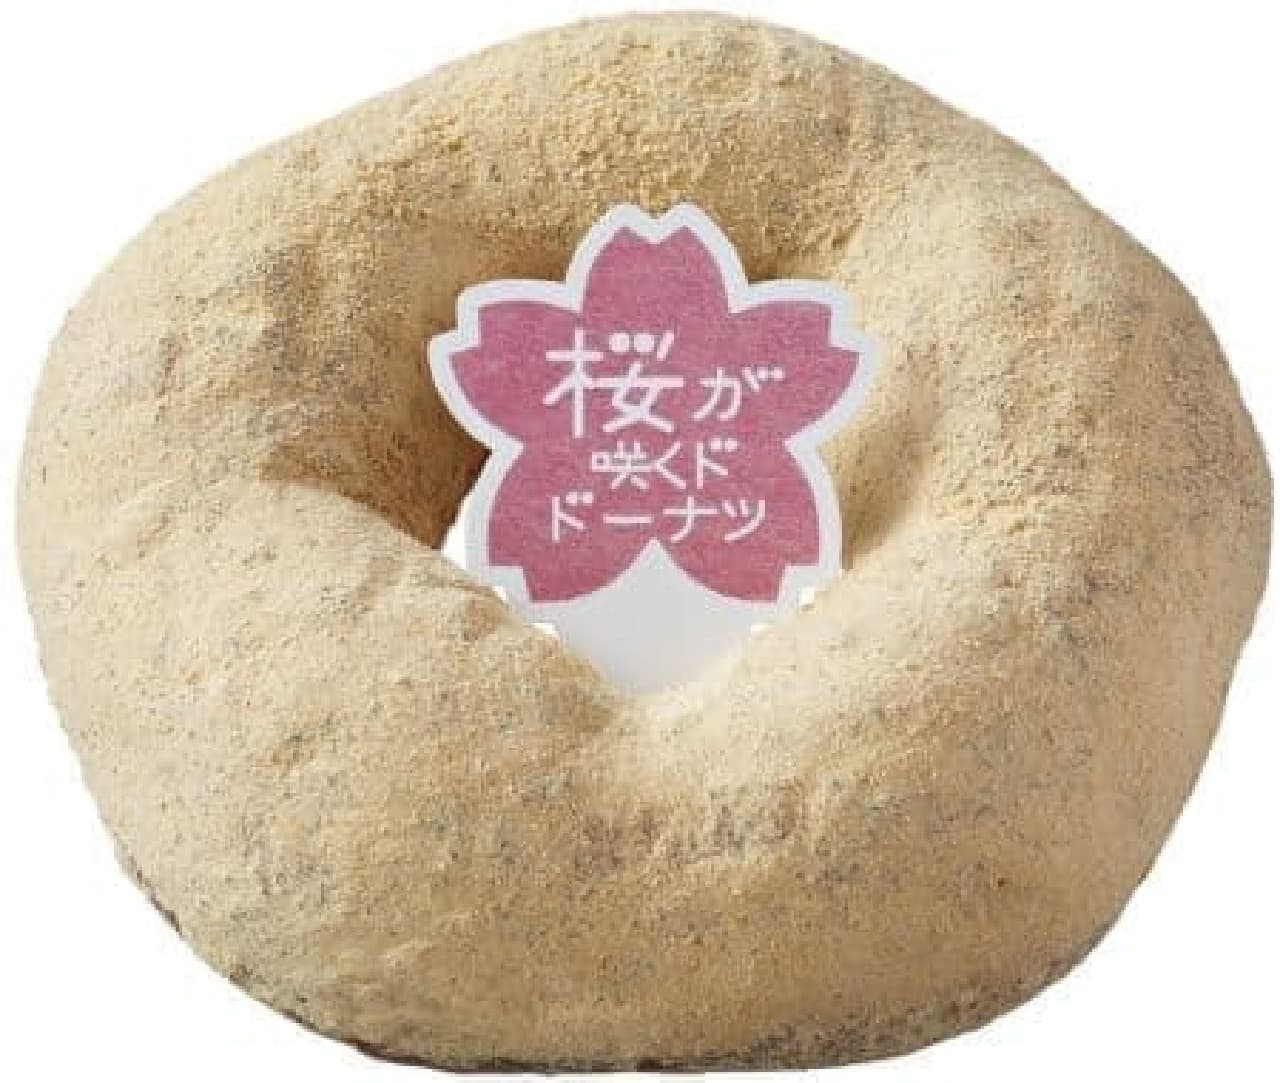 Mister Donut "Sakura Blooming Donut"